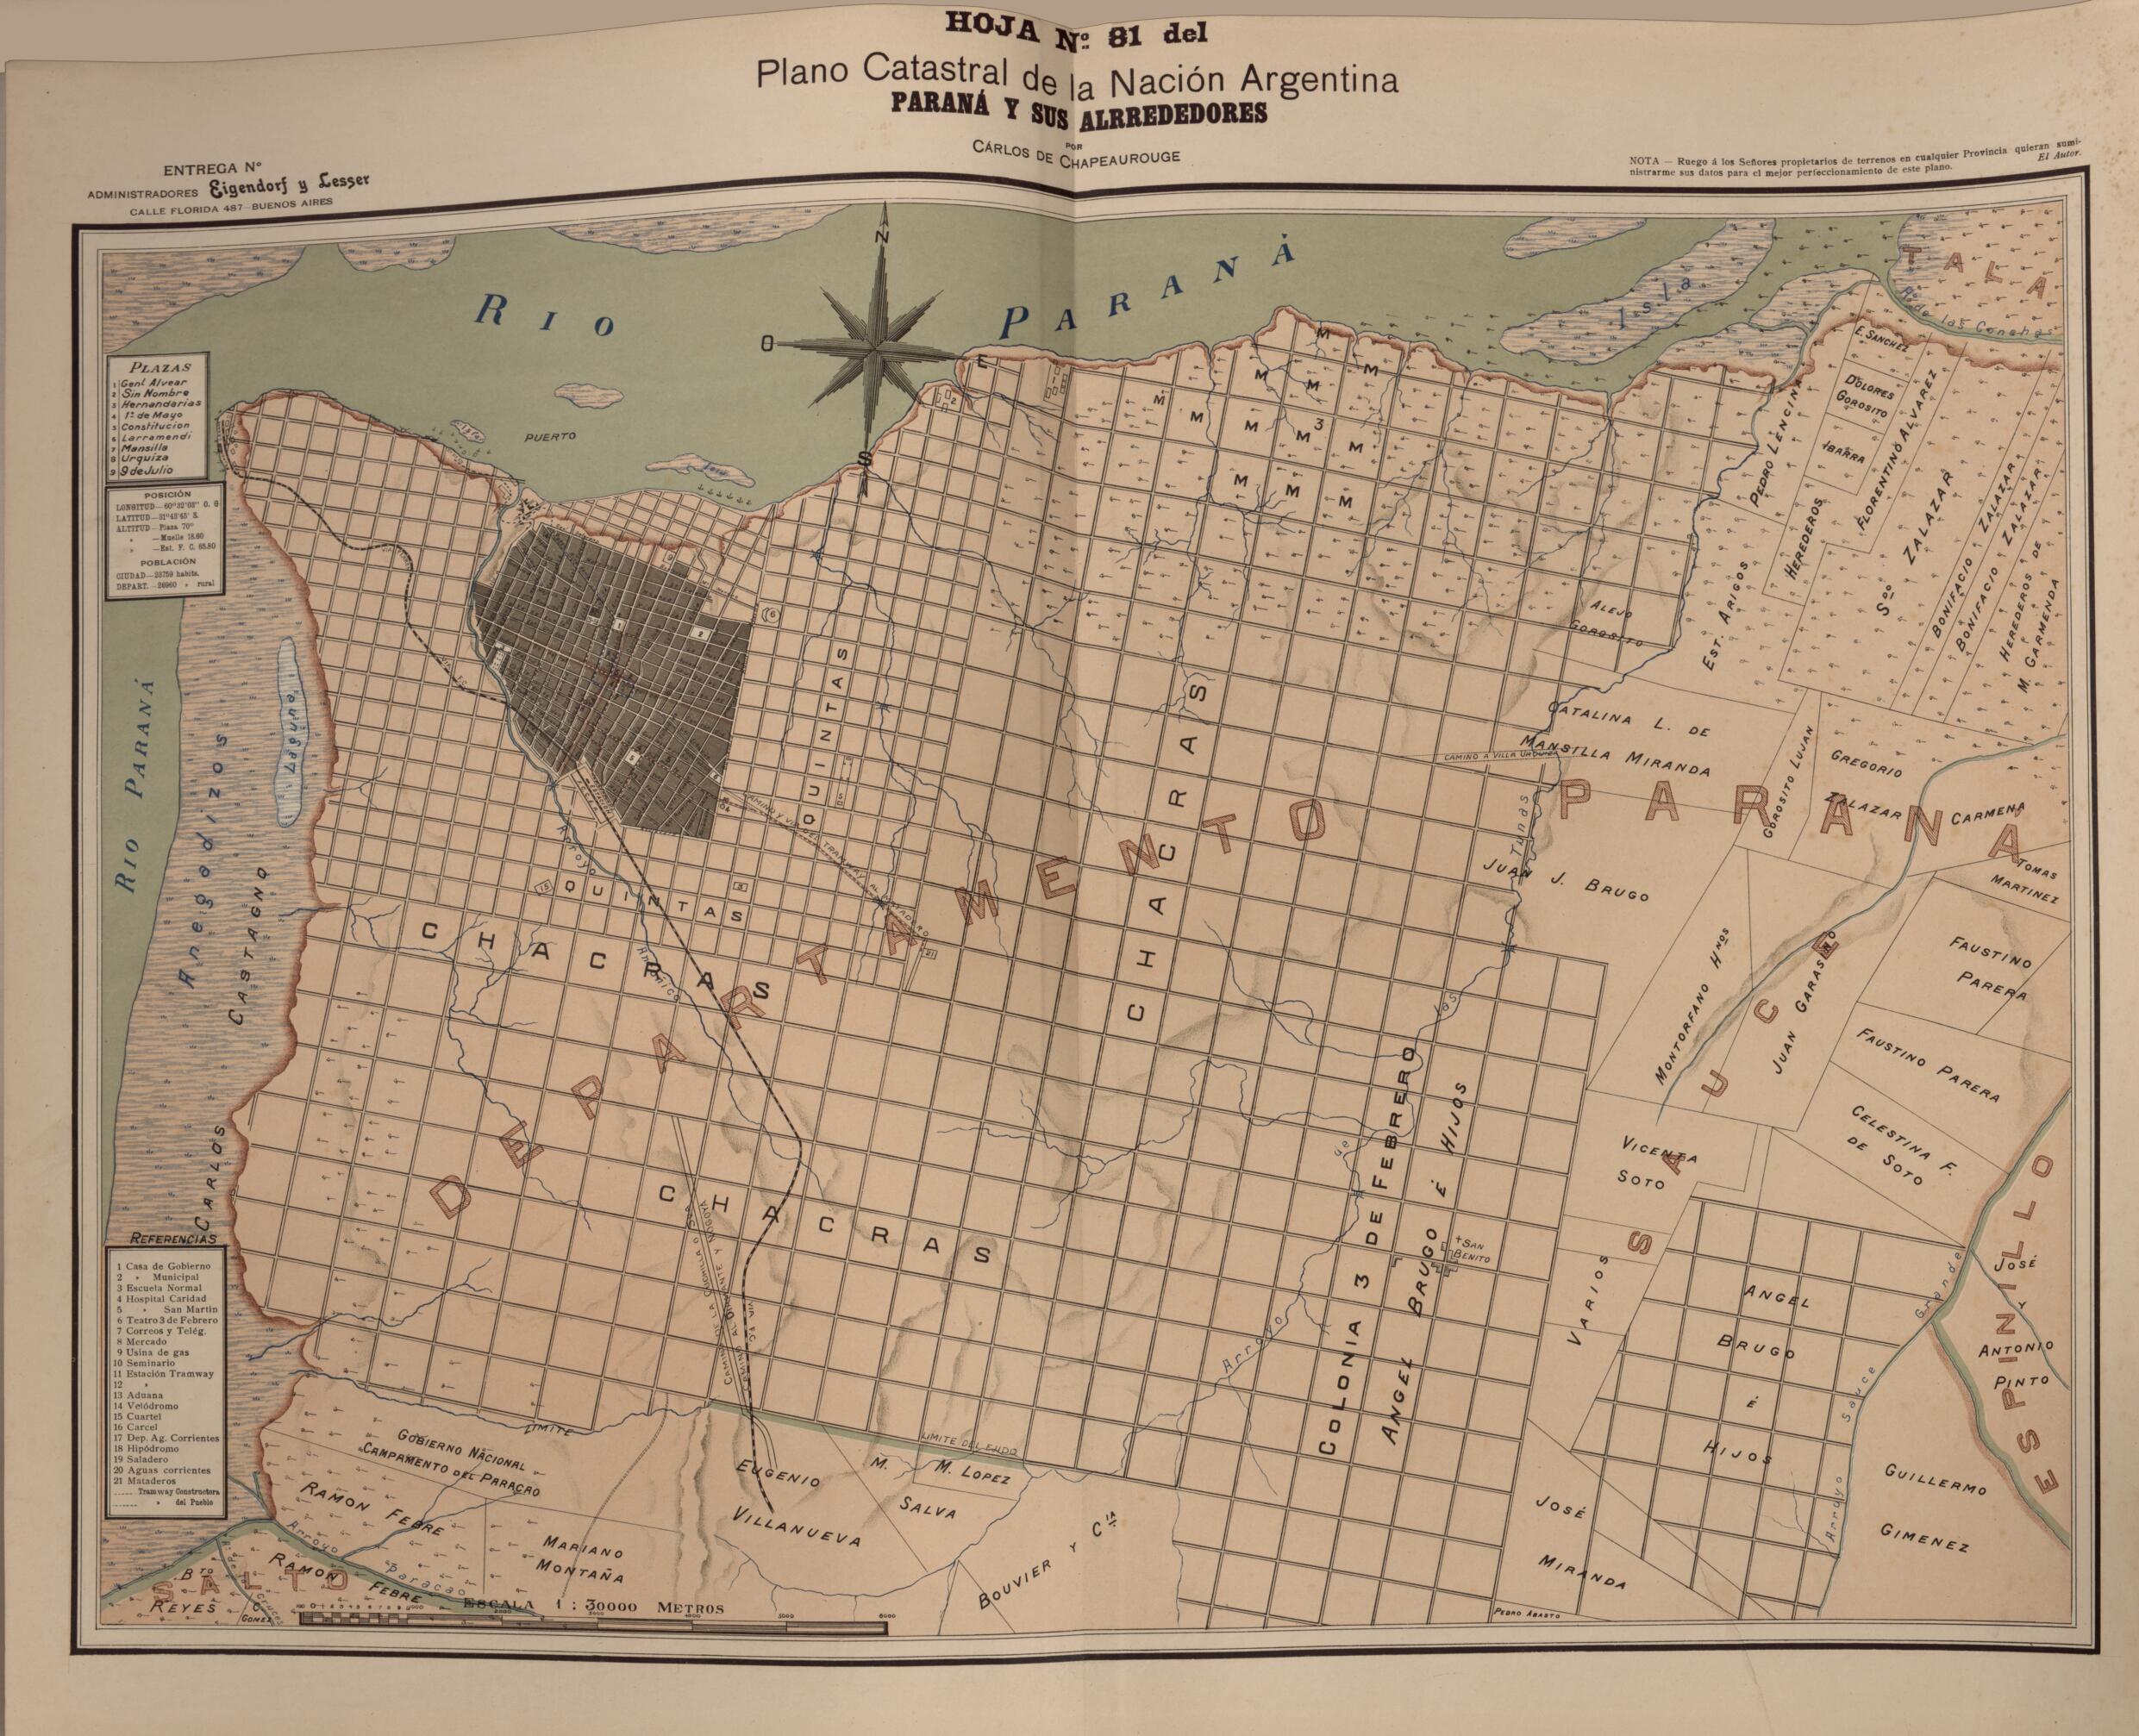 This old map of Plano Catastral De La Nacion Hoja No. 81 from República Argentina from 1905 was created by Carlos De Chapeaurouge in 1905